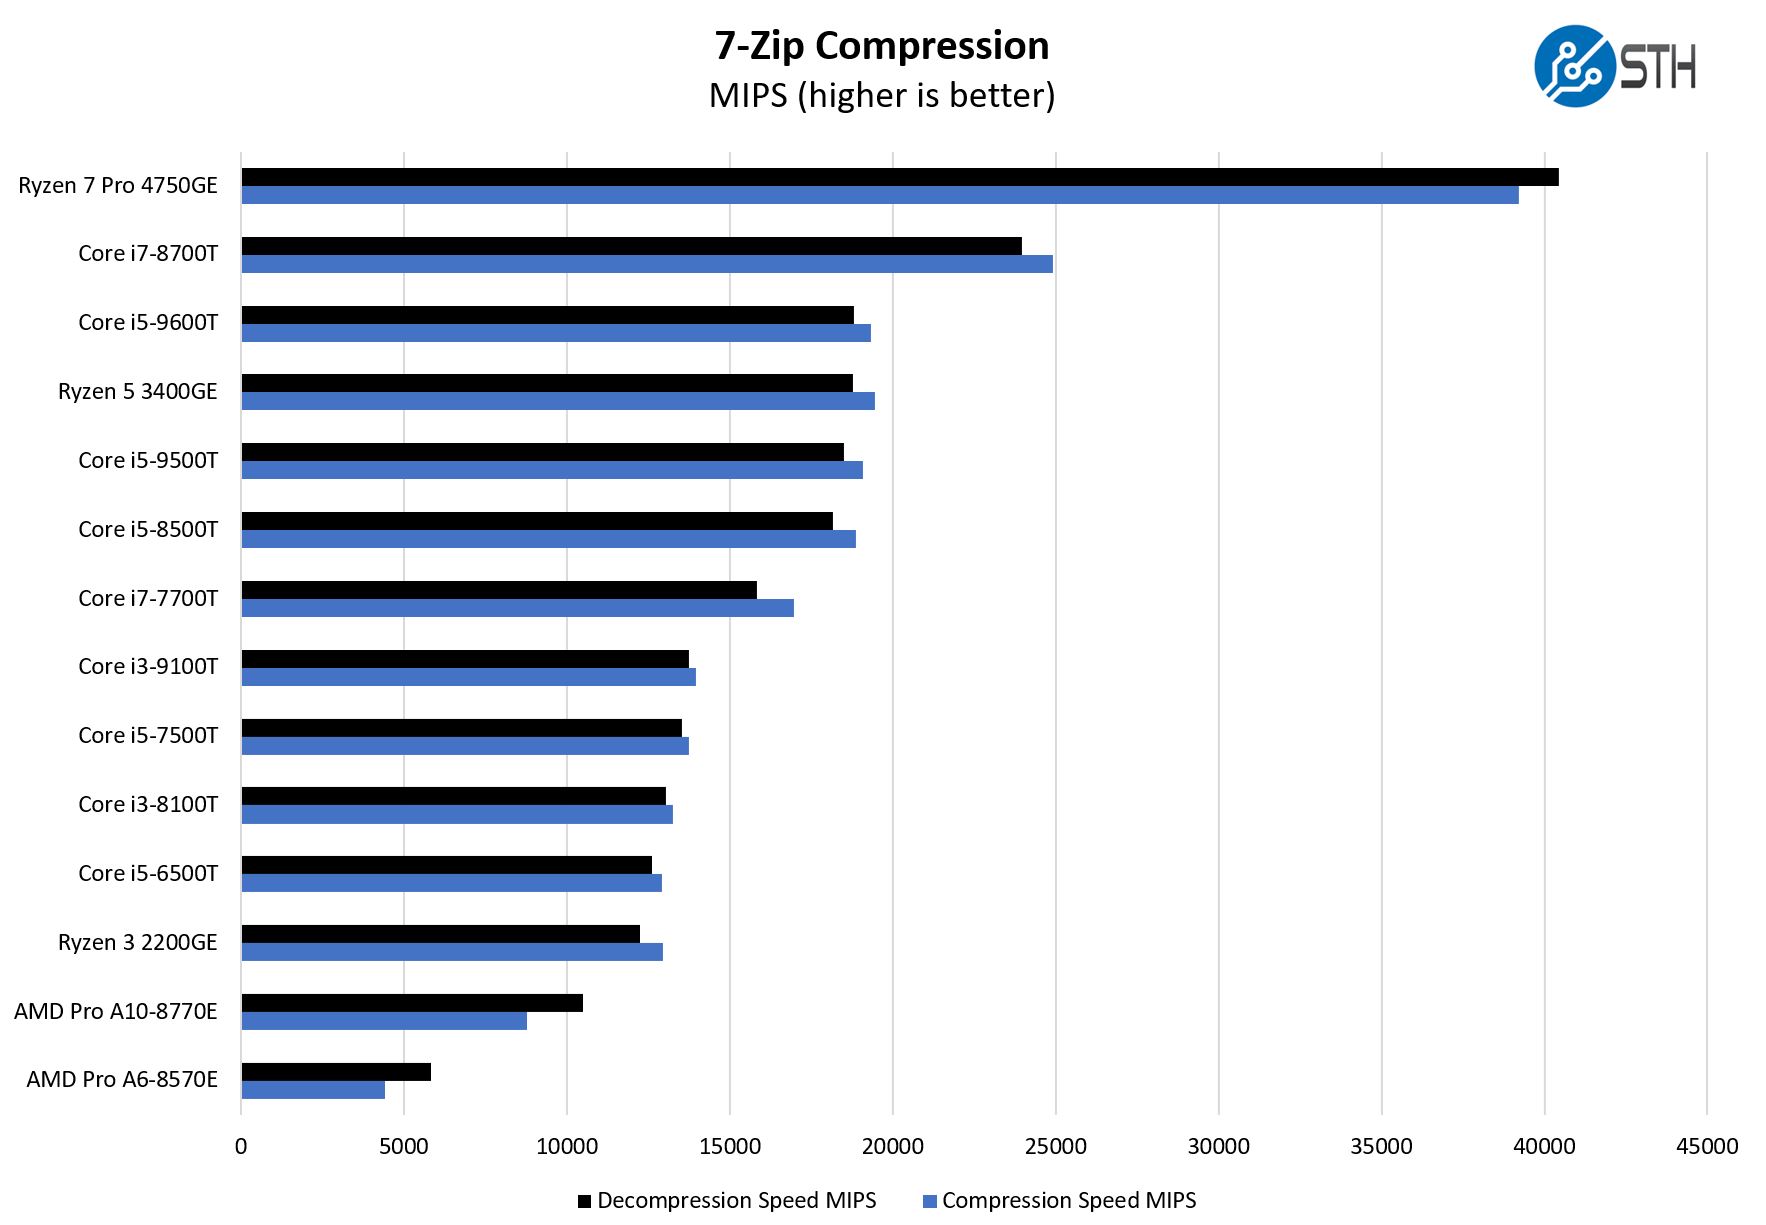 AMD Ryzen 7 Pro 4750GE 7zip Compression Benchmark